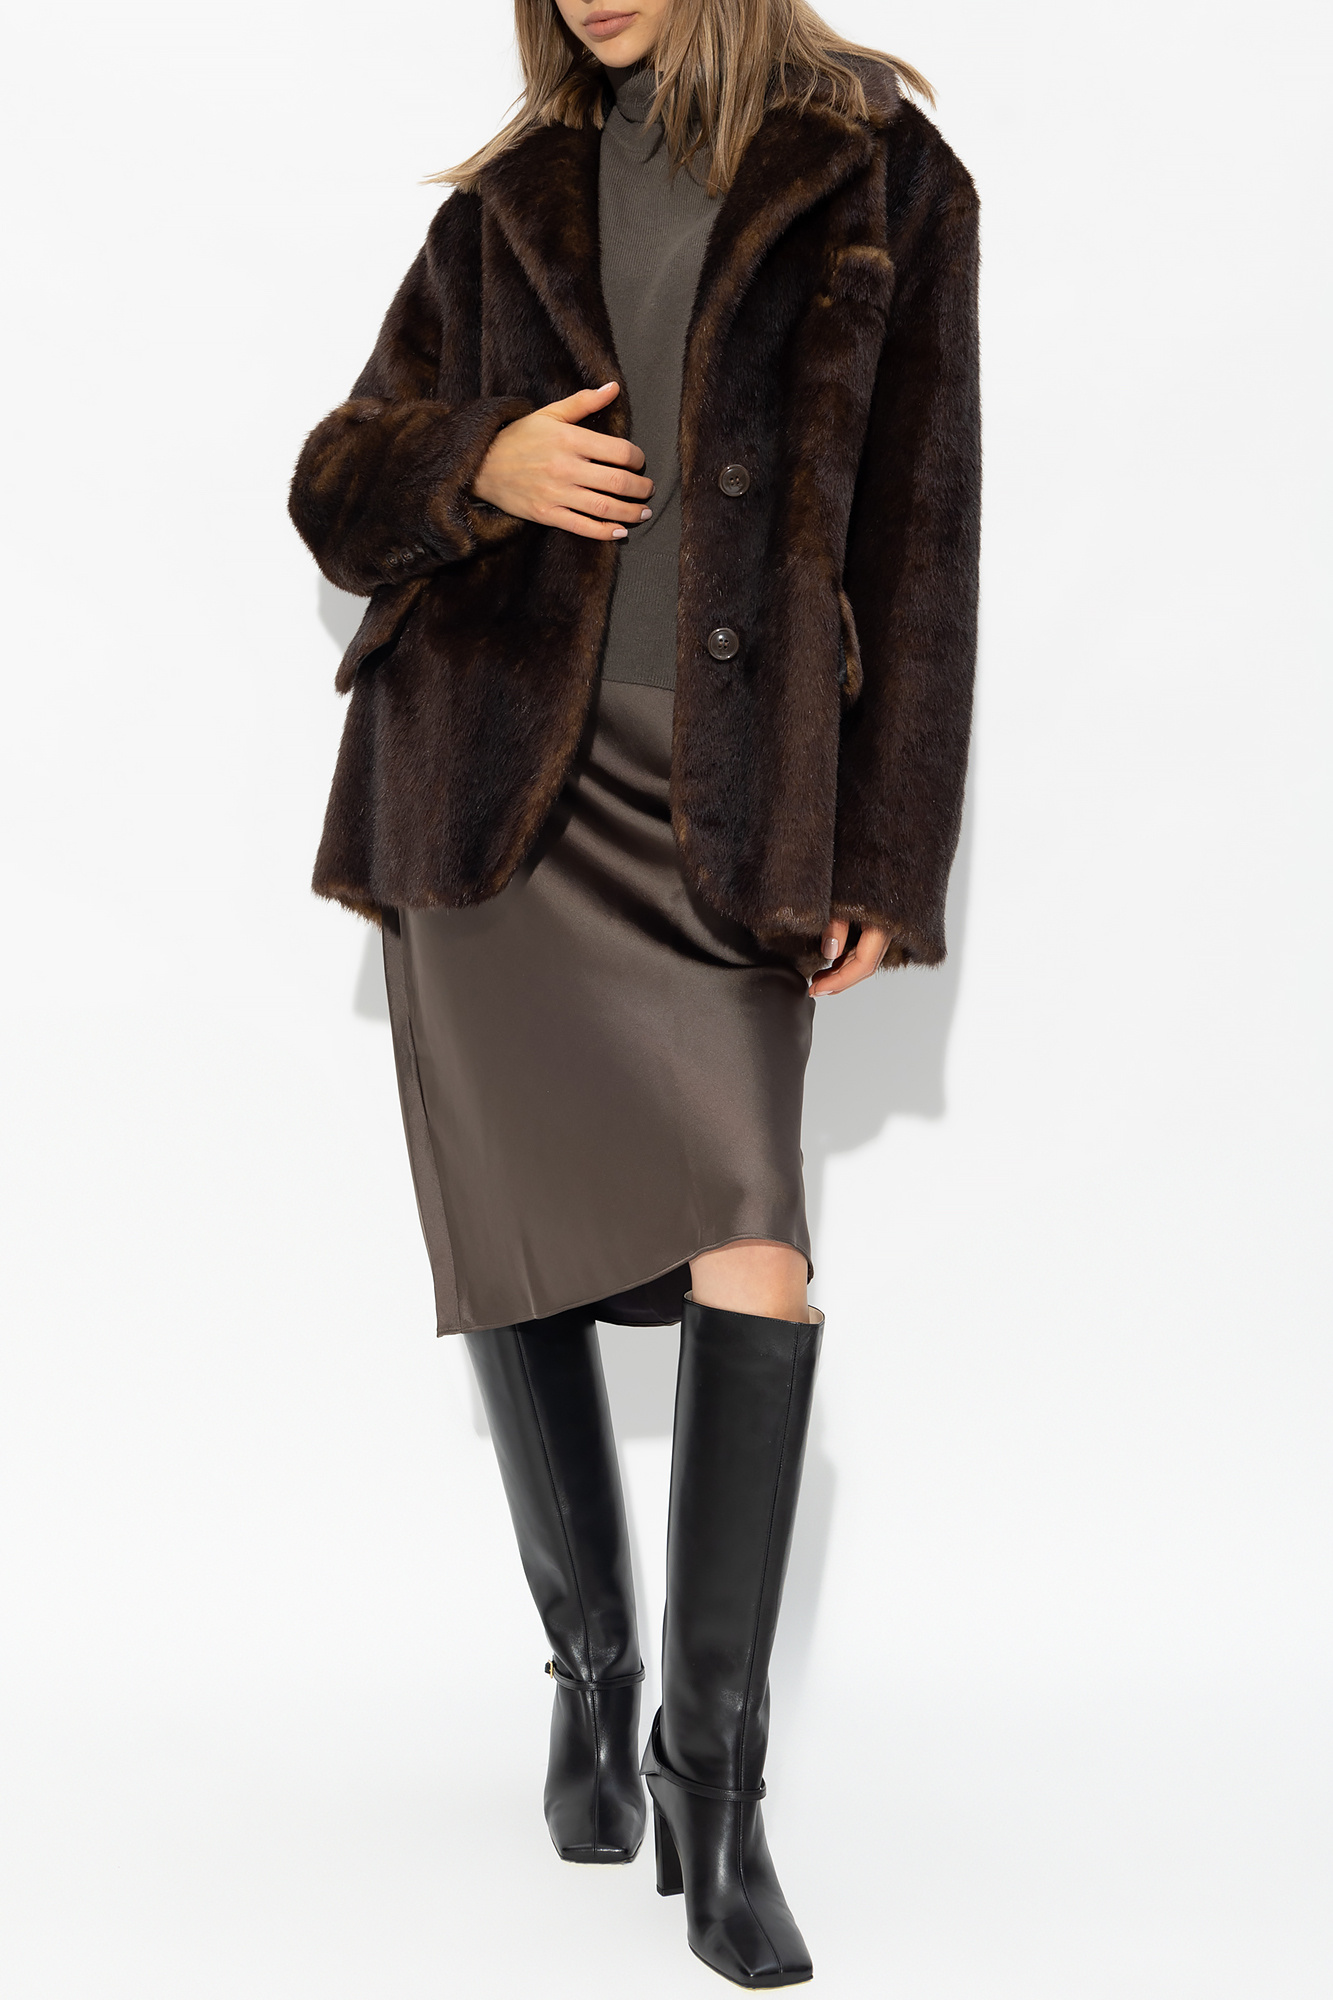 Louis Vuitton Speedy Bandouliere 25 Fall Fashion Outfit Belinda